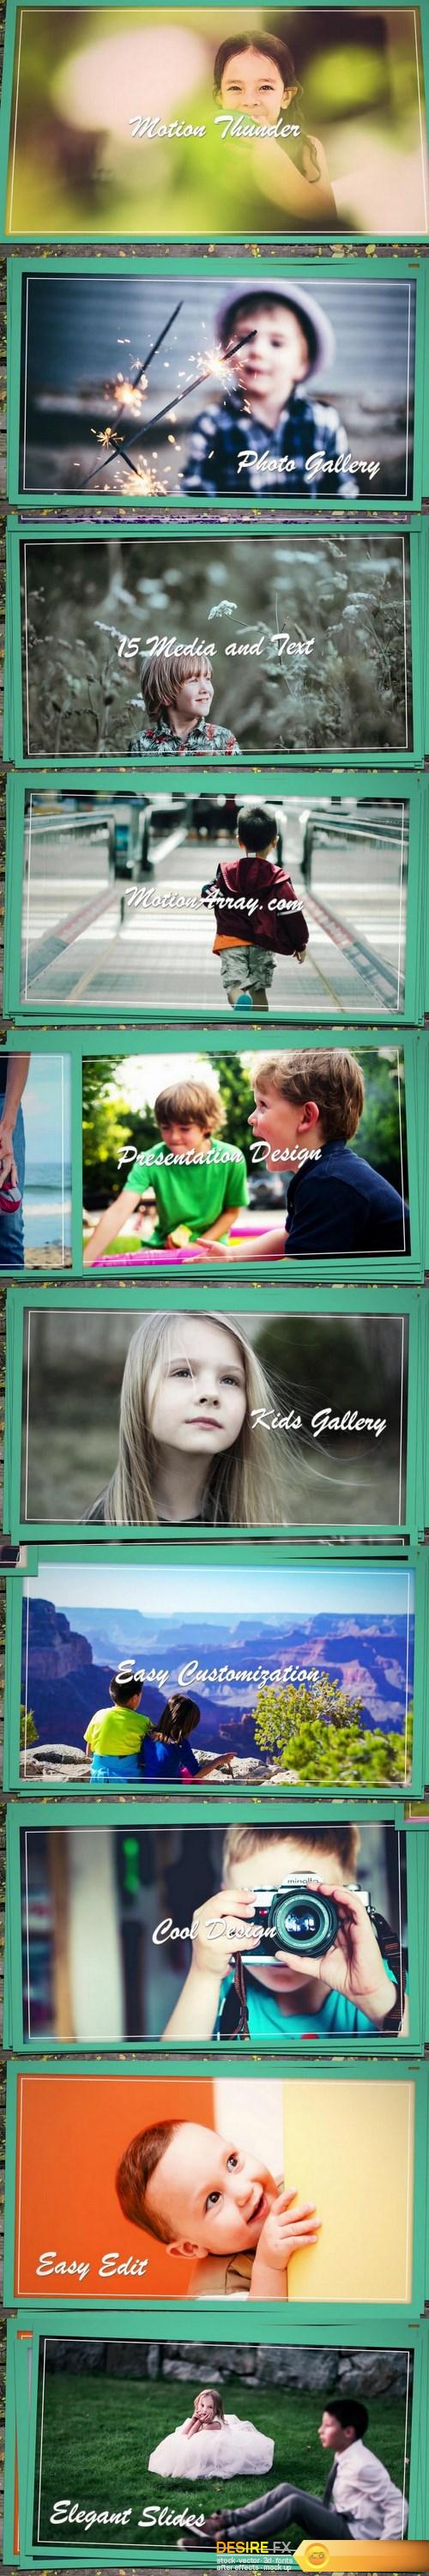 Kids-gallery-38490